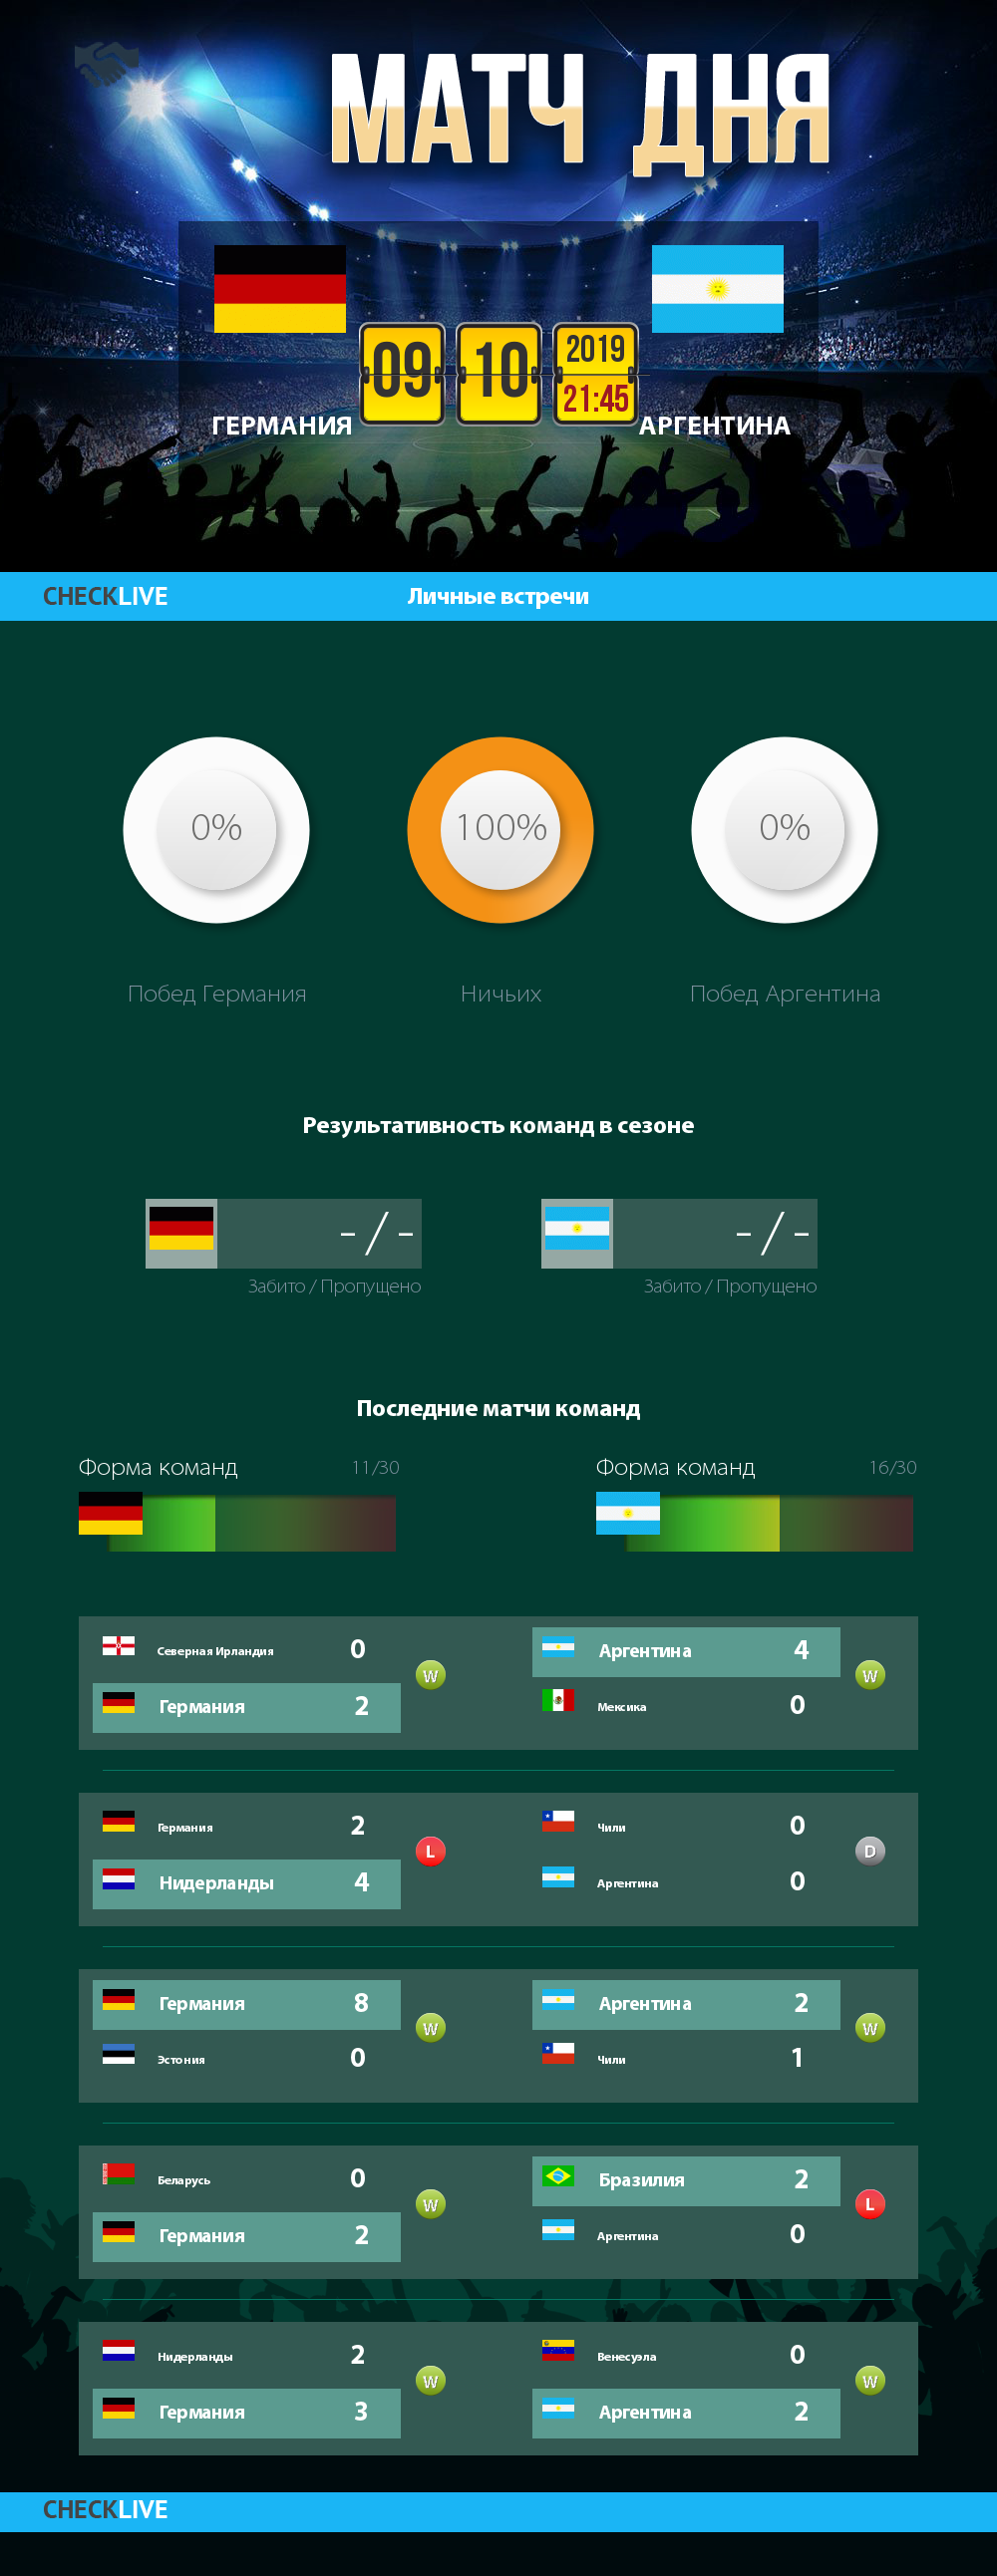 Инфографика Германия и Аргентина матч дня 09.10.2019